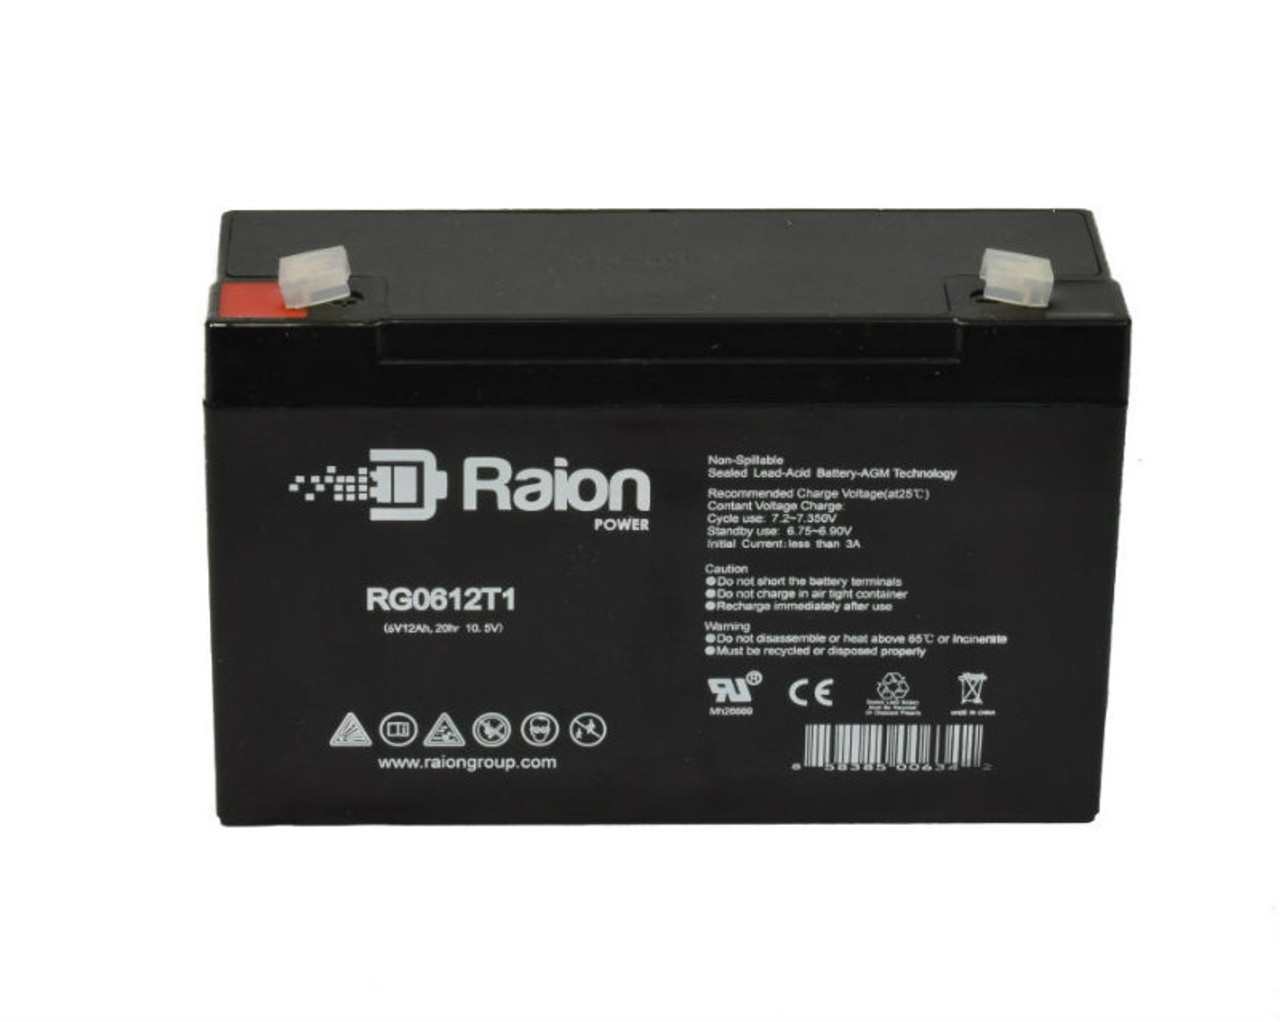 Raion Power RG06120T1 SLA Battery for Light Alarms PS10MP